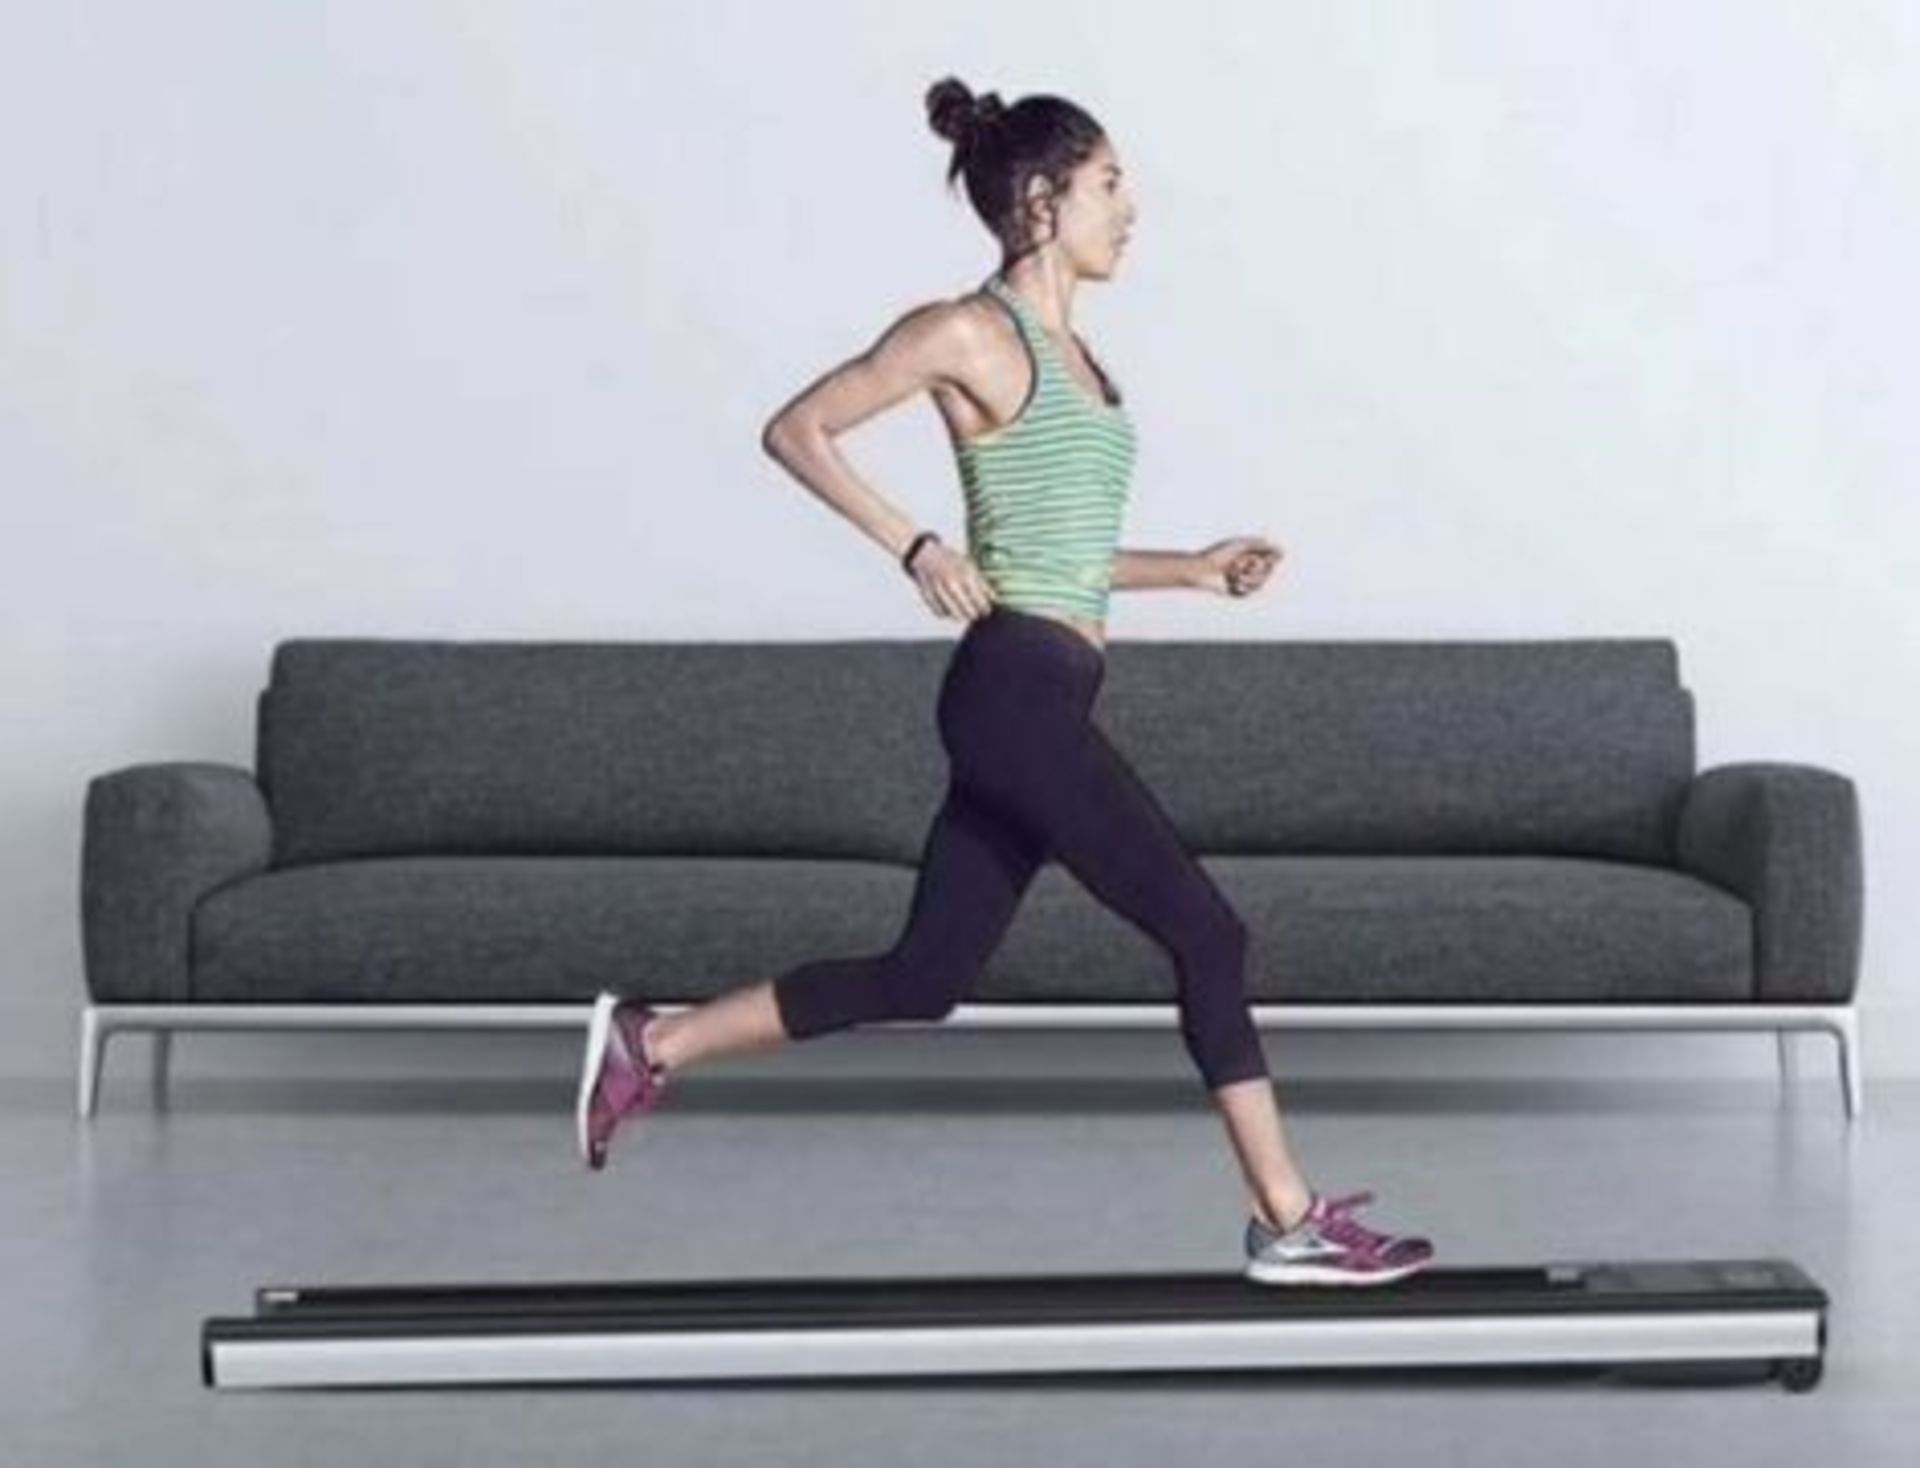 1 x Slim Tread Ultra Thin Smart Treadmill Running / Walking Machine - Lightweight With Folding - Image 6 of 6